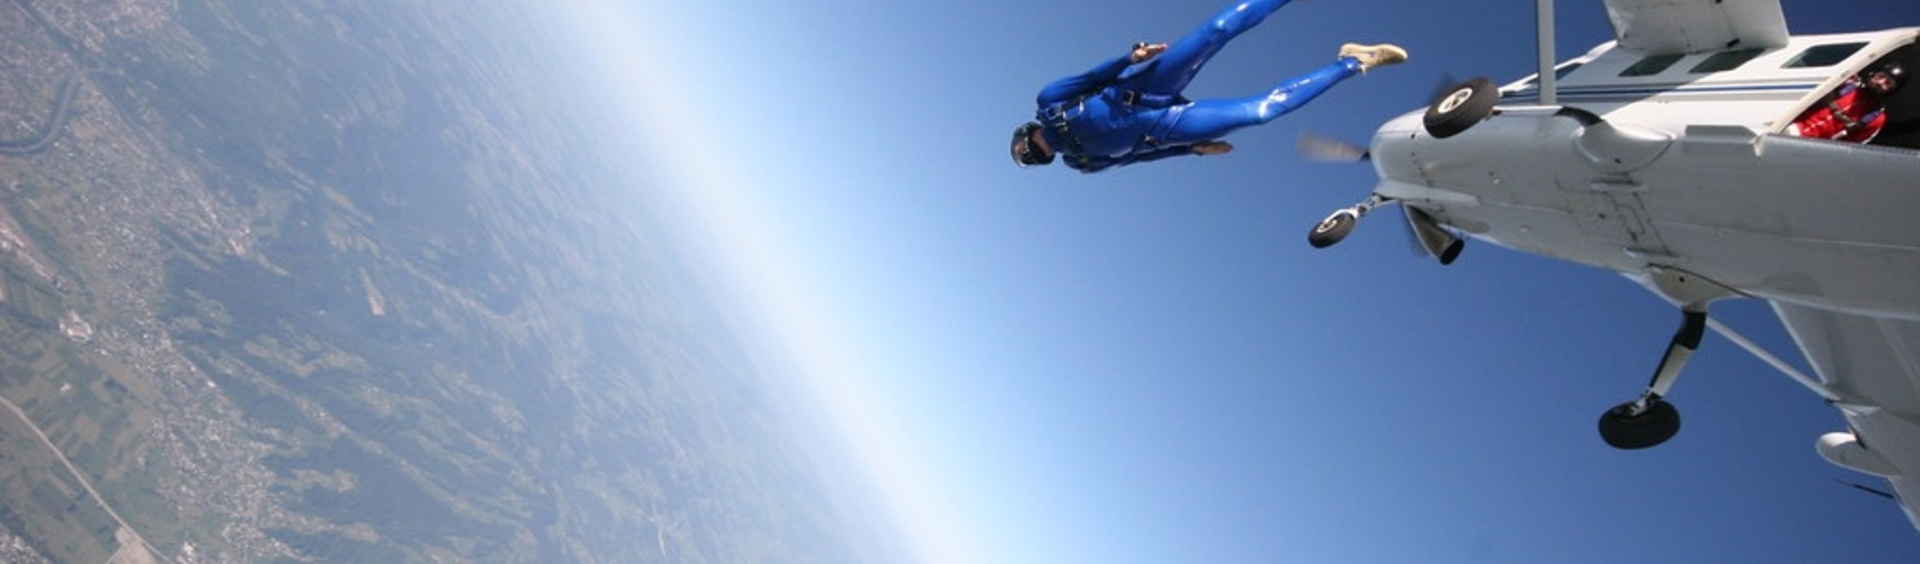 skydiving freefall speed